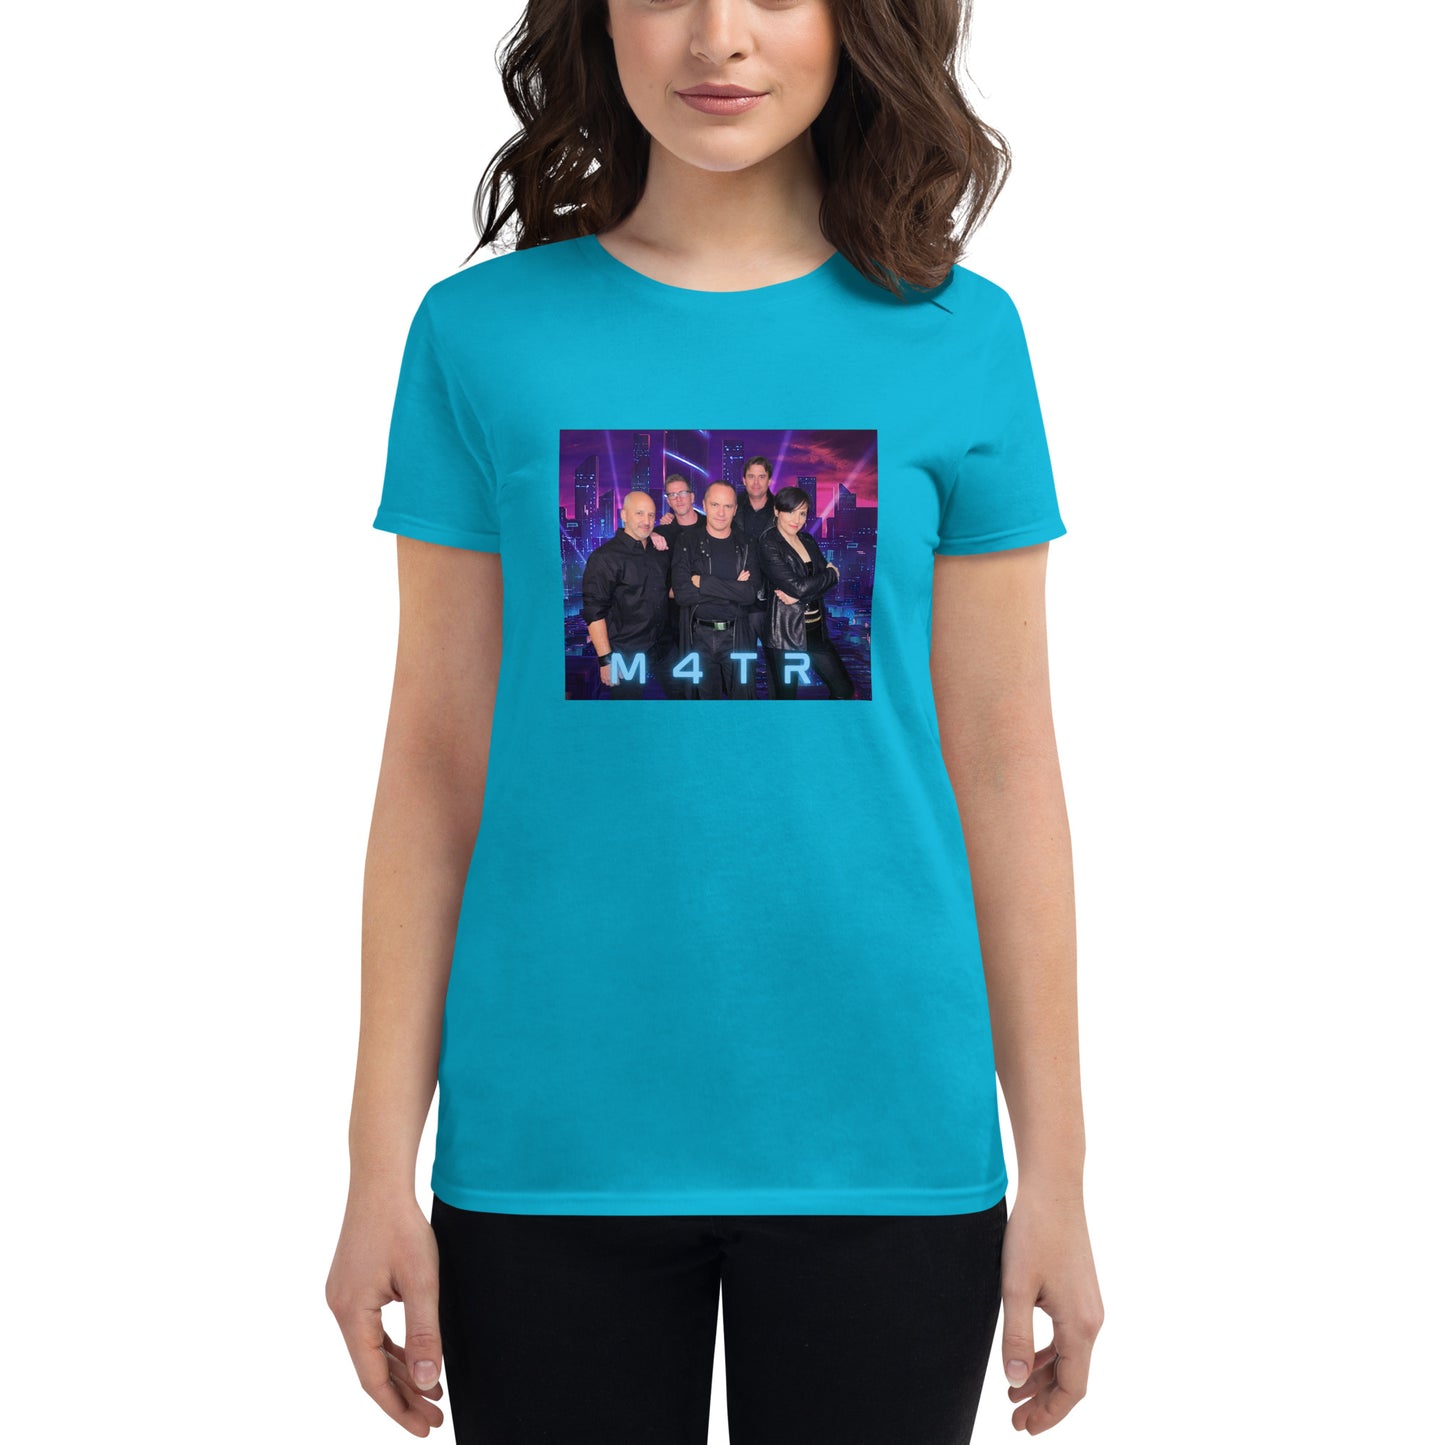 Women's Short Sleeve T-shirt (Darkwave Band)